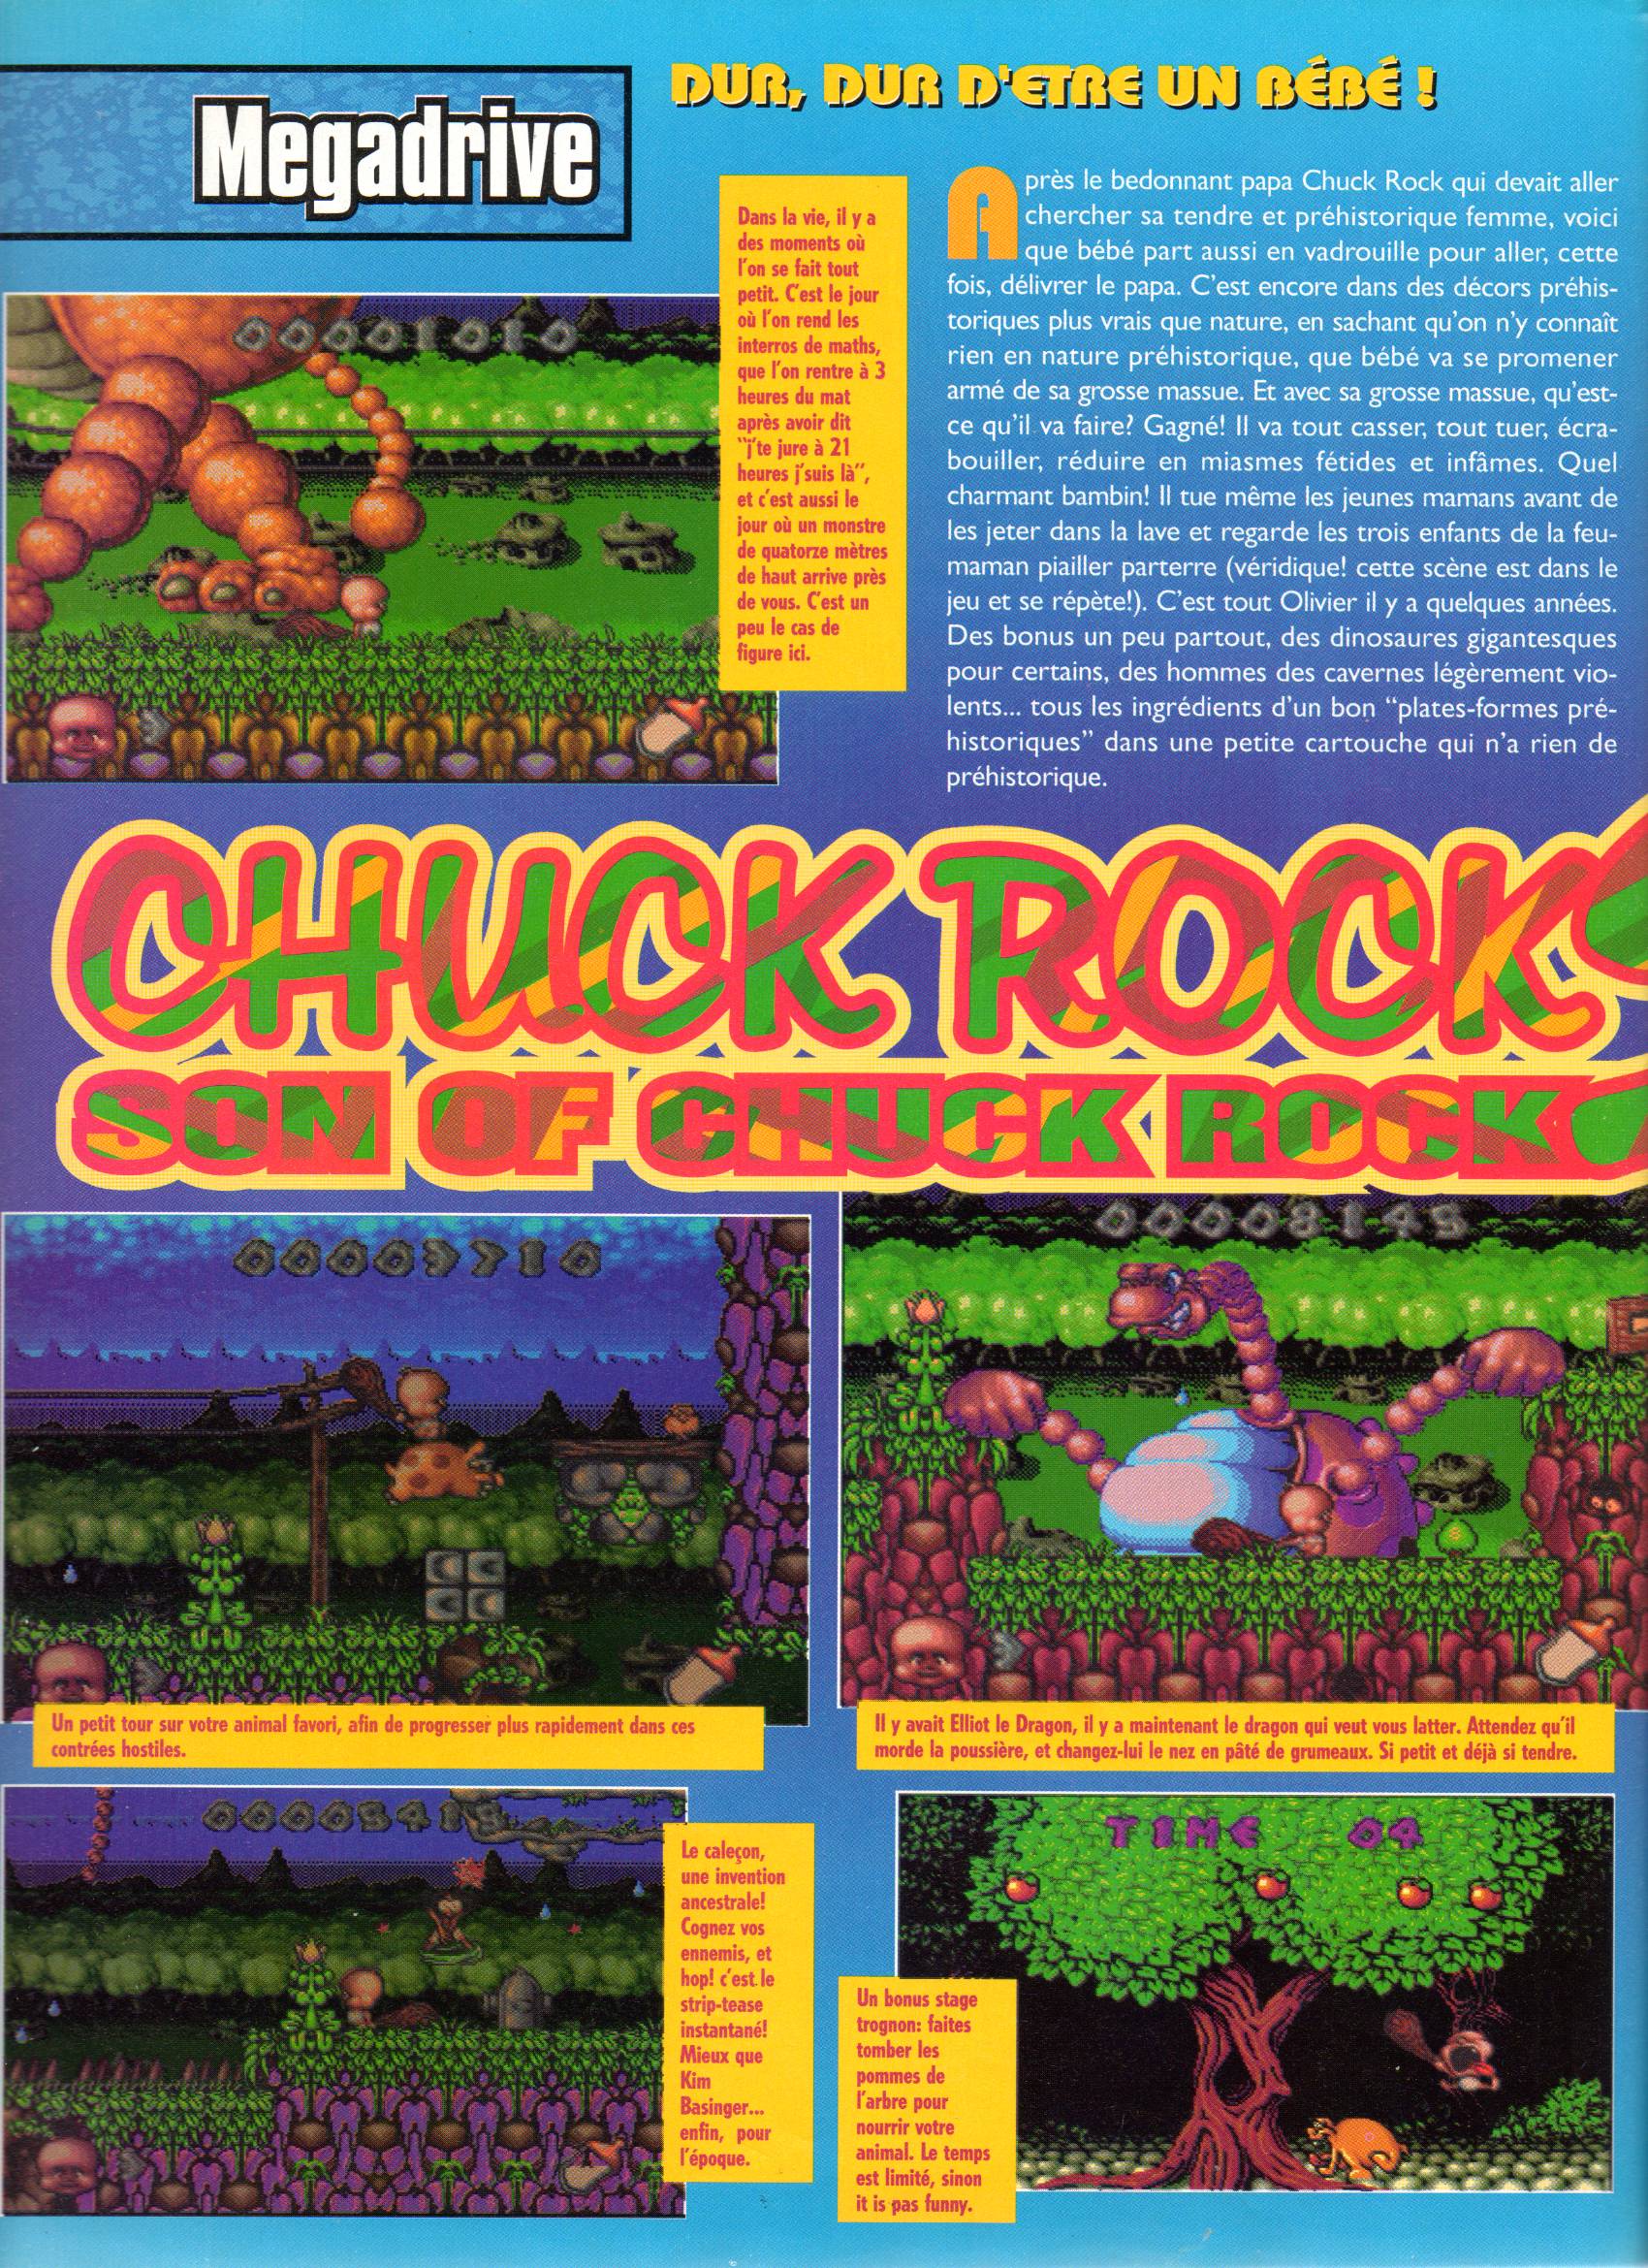 [TEST] Chuck Rock II (Mega Drive) Joypad%2023%20Septembre%201993%20page138